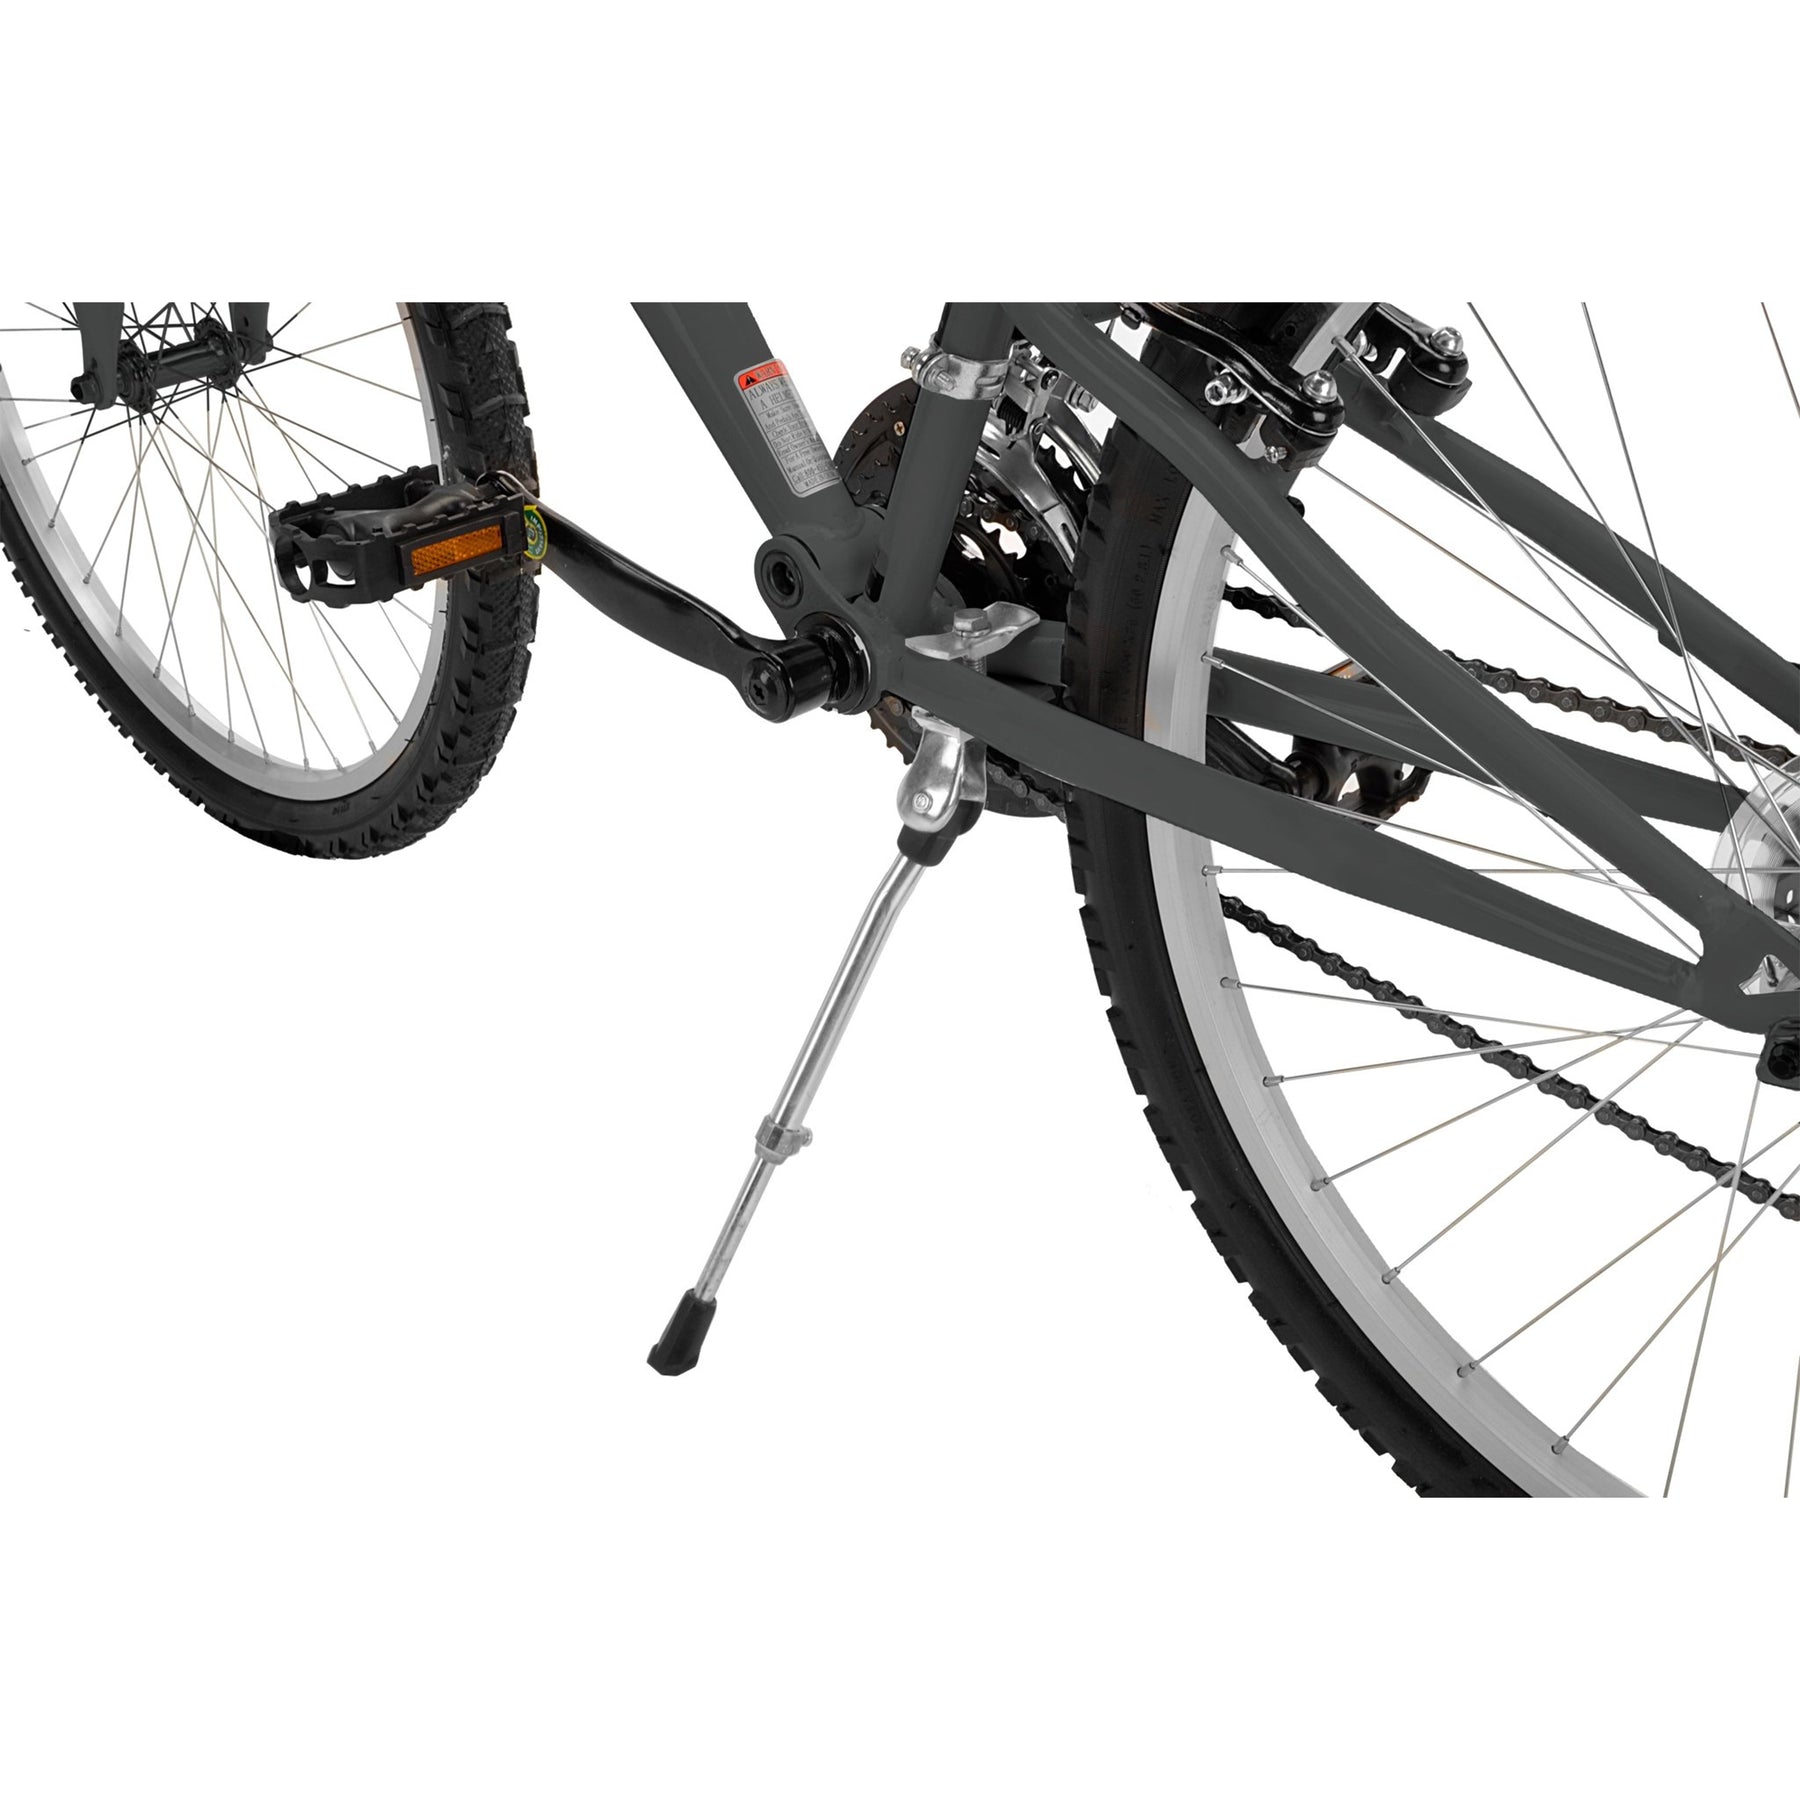 Capstone Adjustable Kick Stand | Fits Most 20" - 700c Bikes